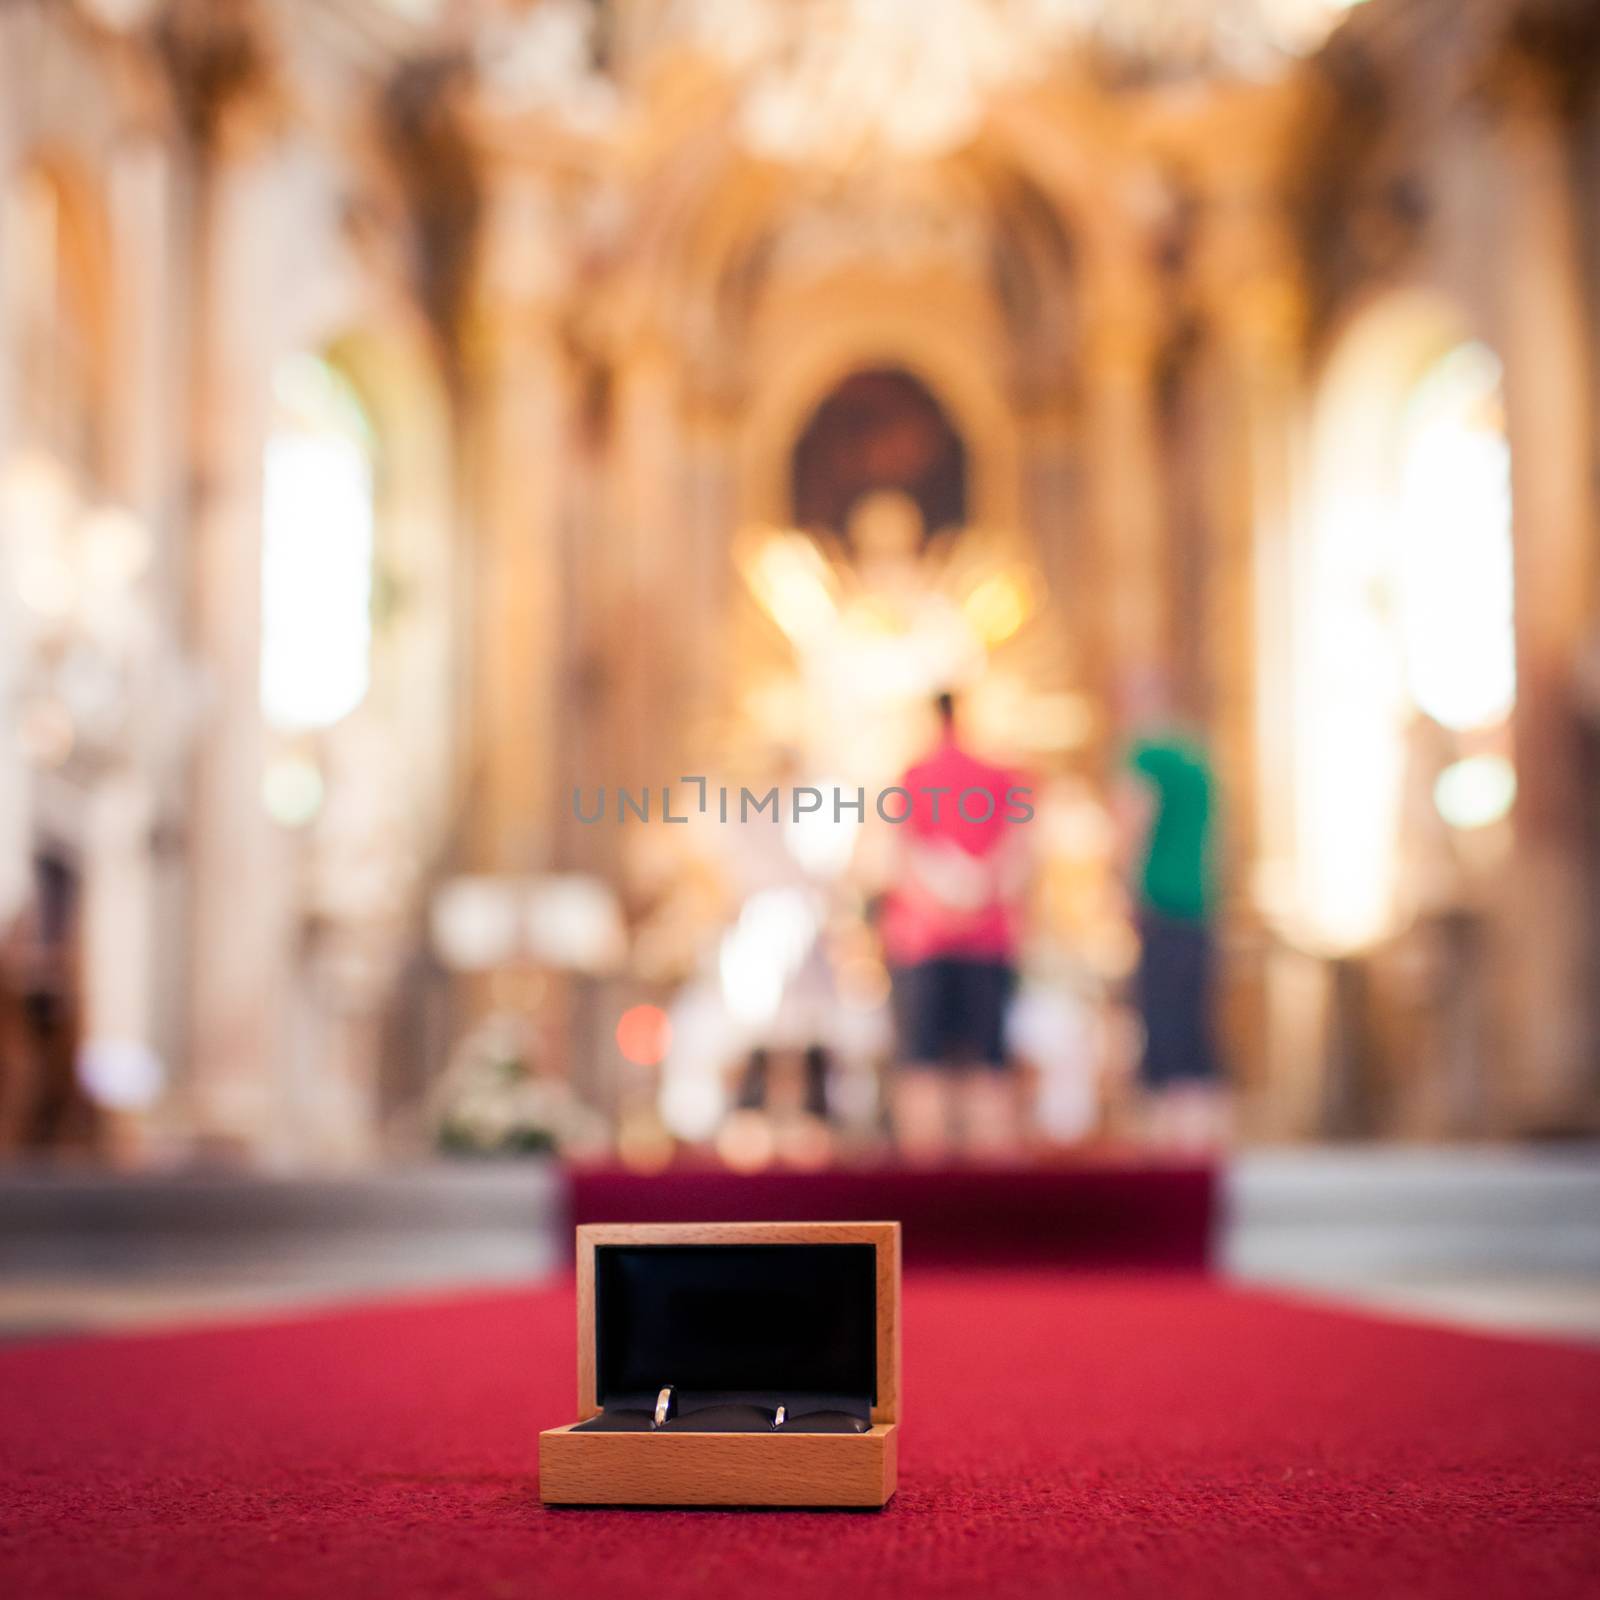 Wedding rings in church by viktor_cap